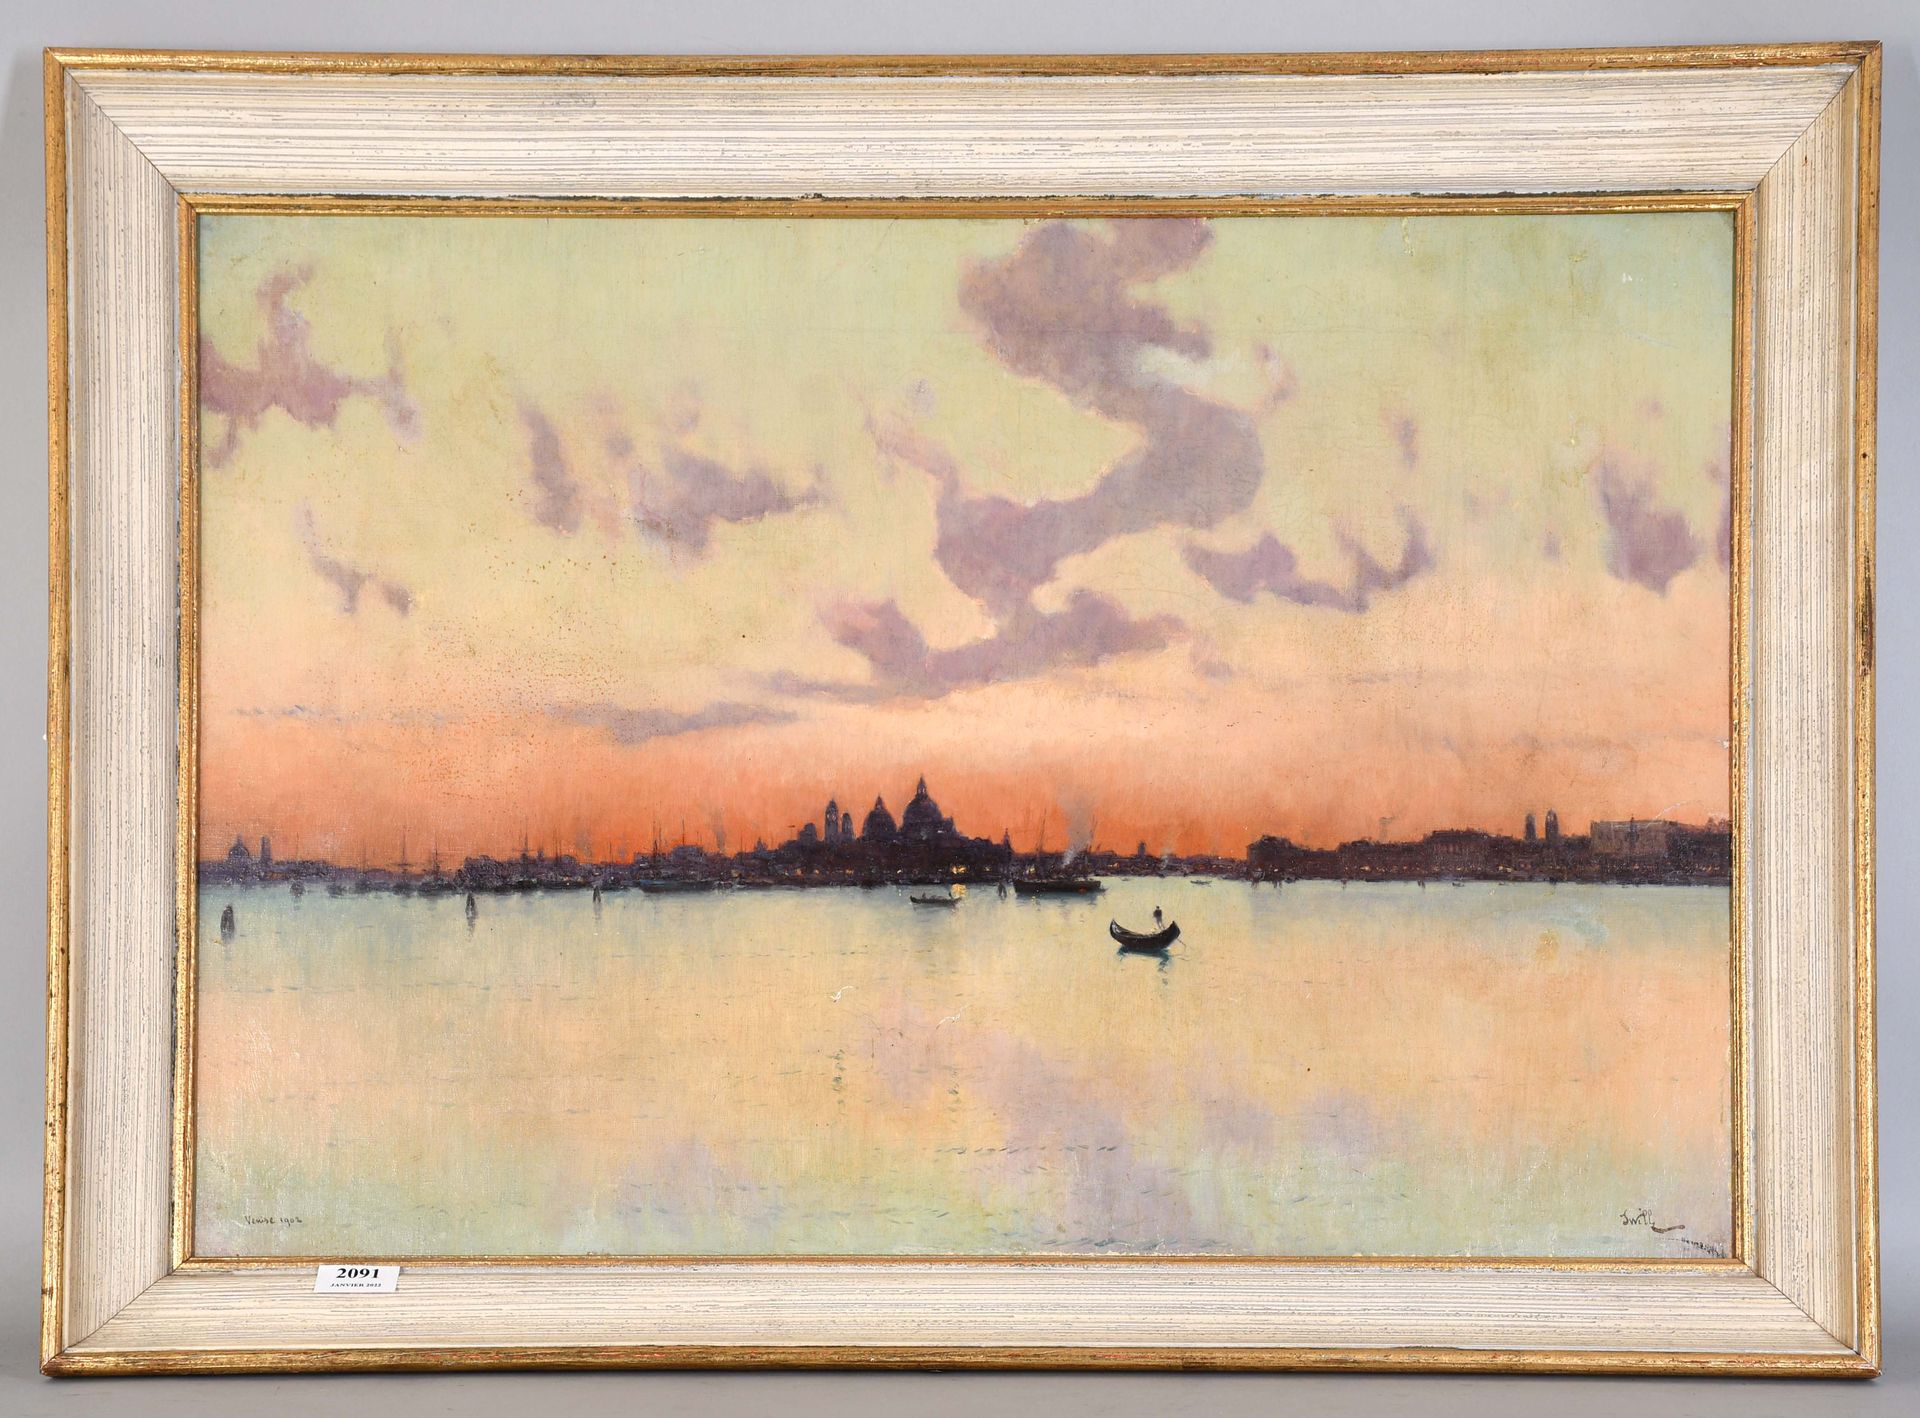 Null J. Will

布面油画："威尼斯的景色"。签名和日期为1902年。

尺寸：51厘米x75厘米。